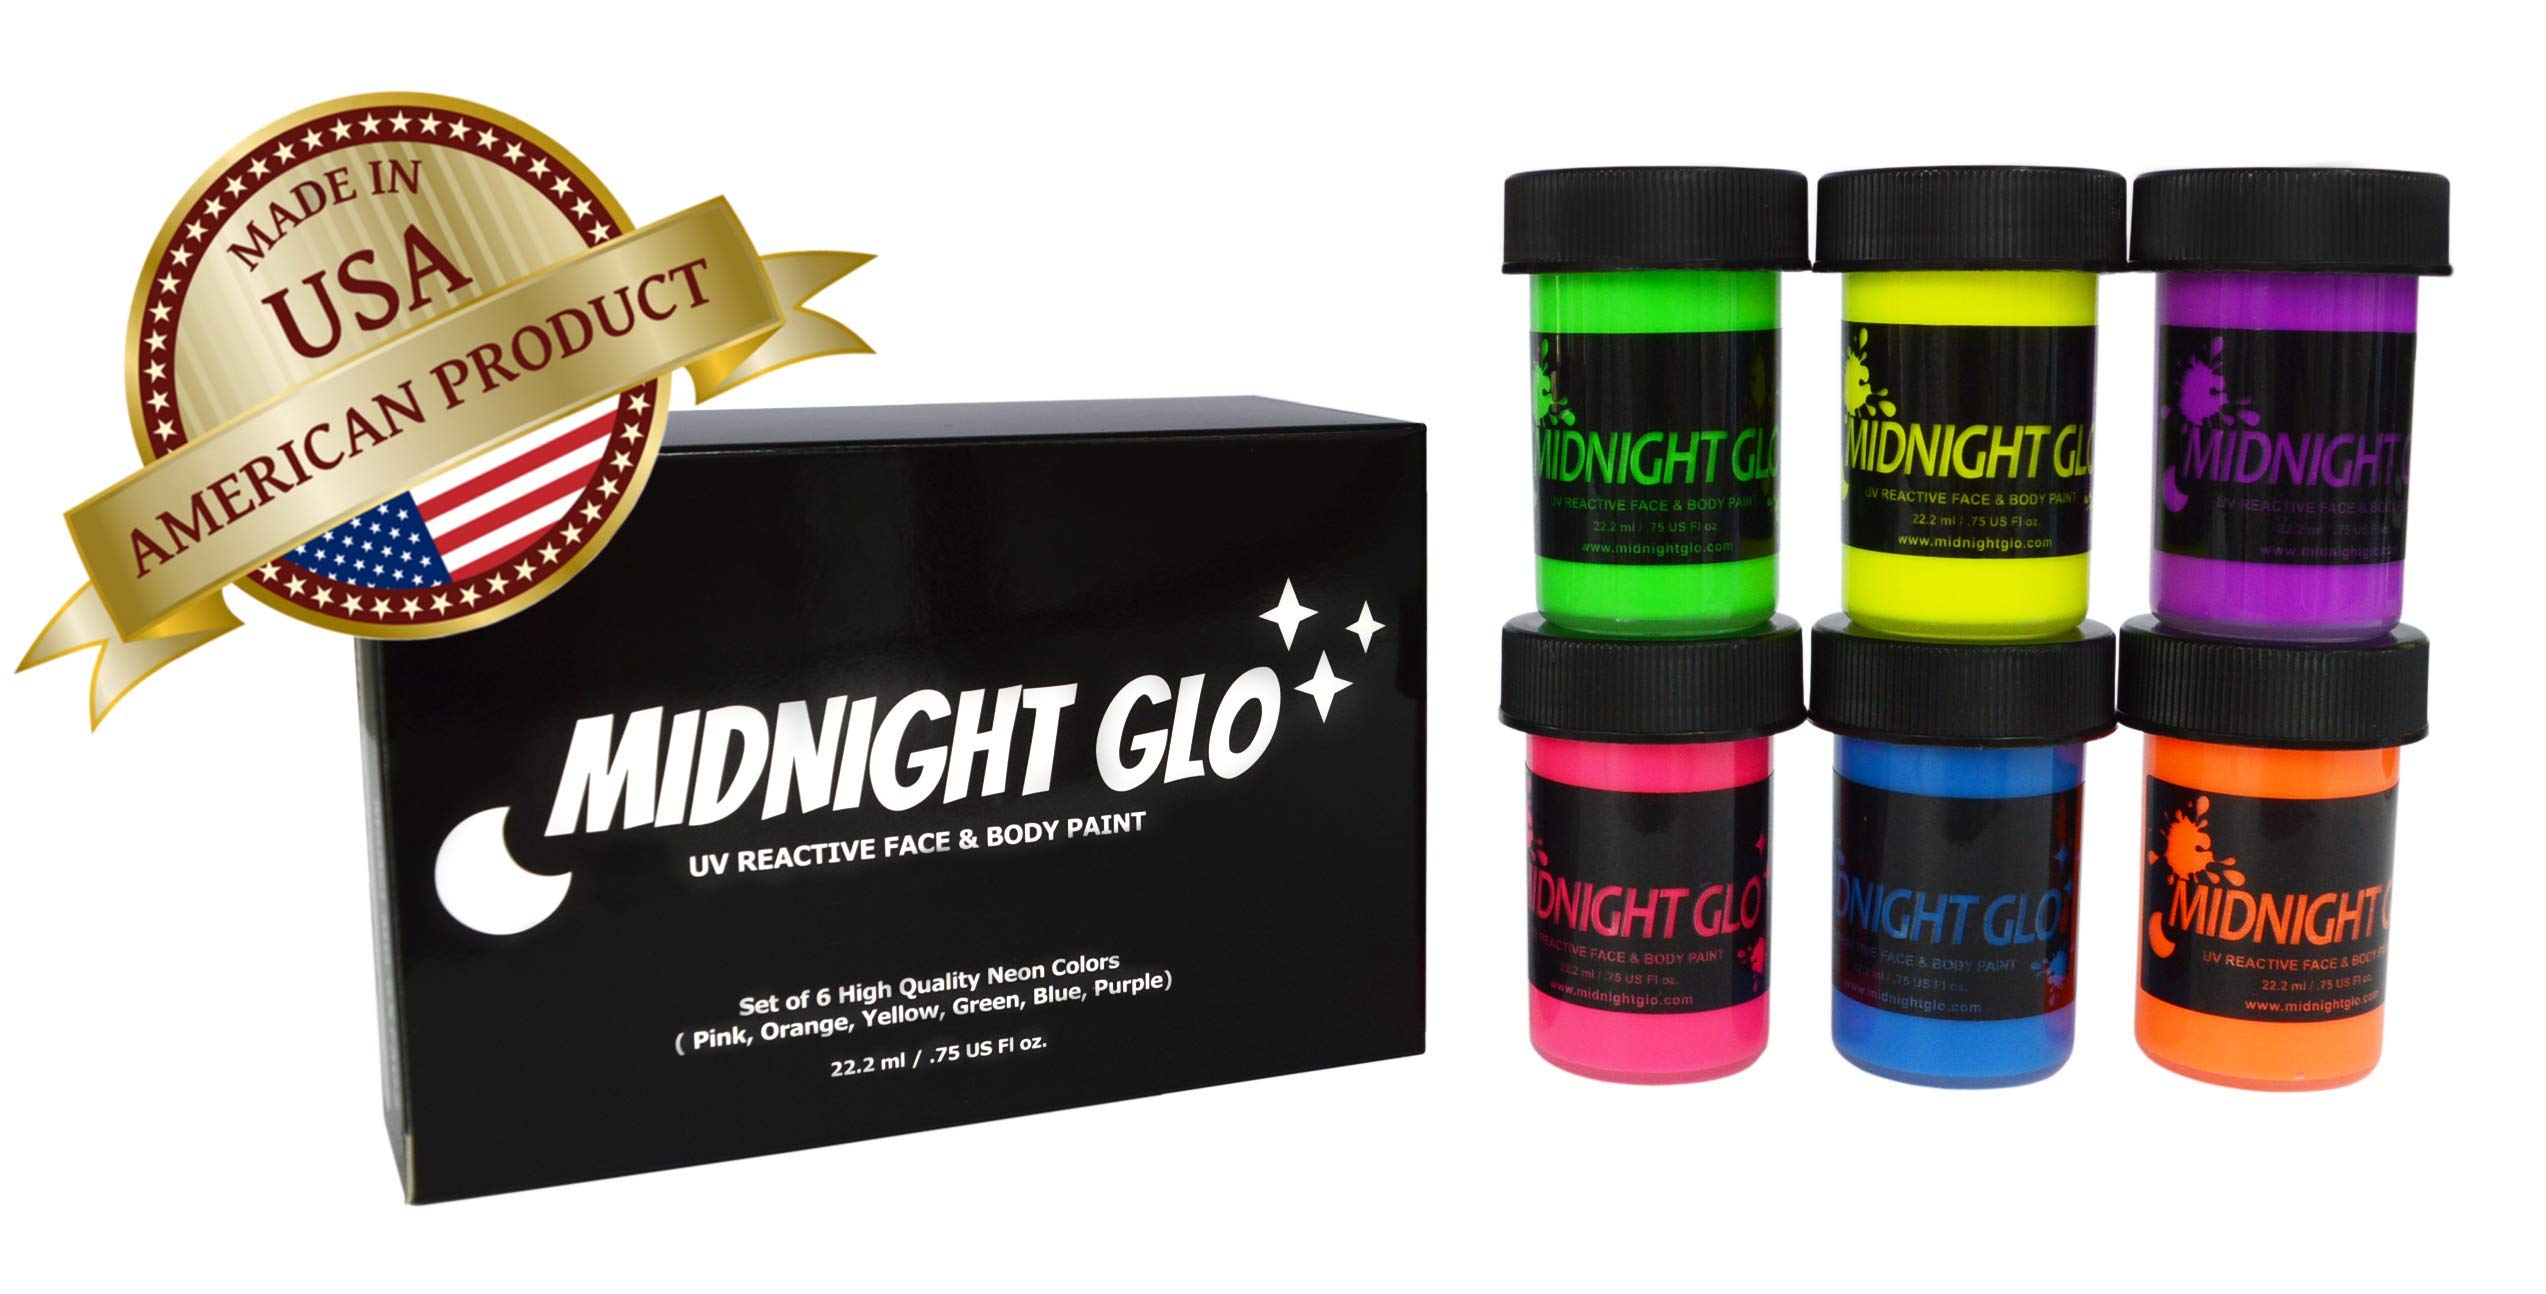 Midnight Glo UV Face & Body Paint Set - Fluorescent Face Paints - Blacklight Reactive - Safe, Washable, Non-Toxic (6 Bottles 0.75 oz. Each)